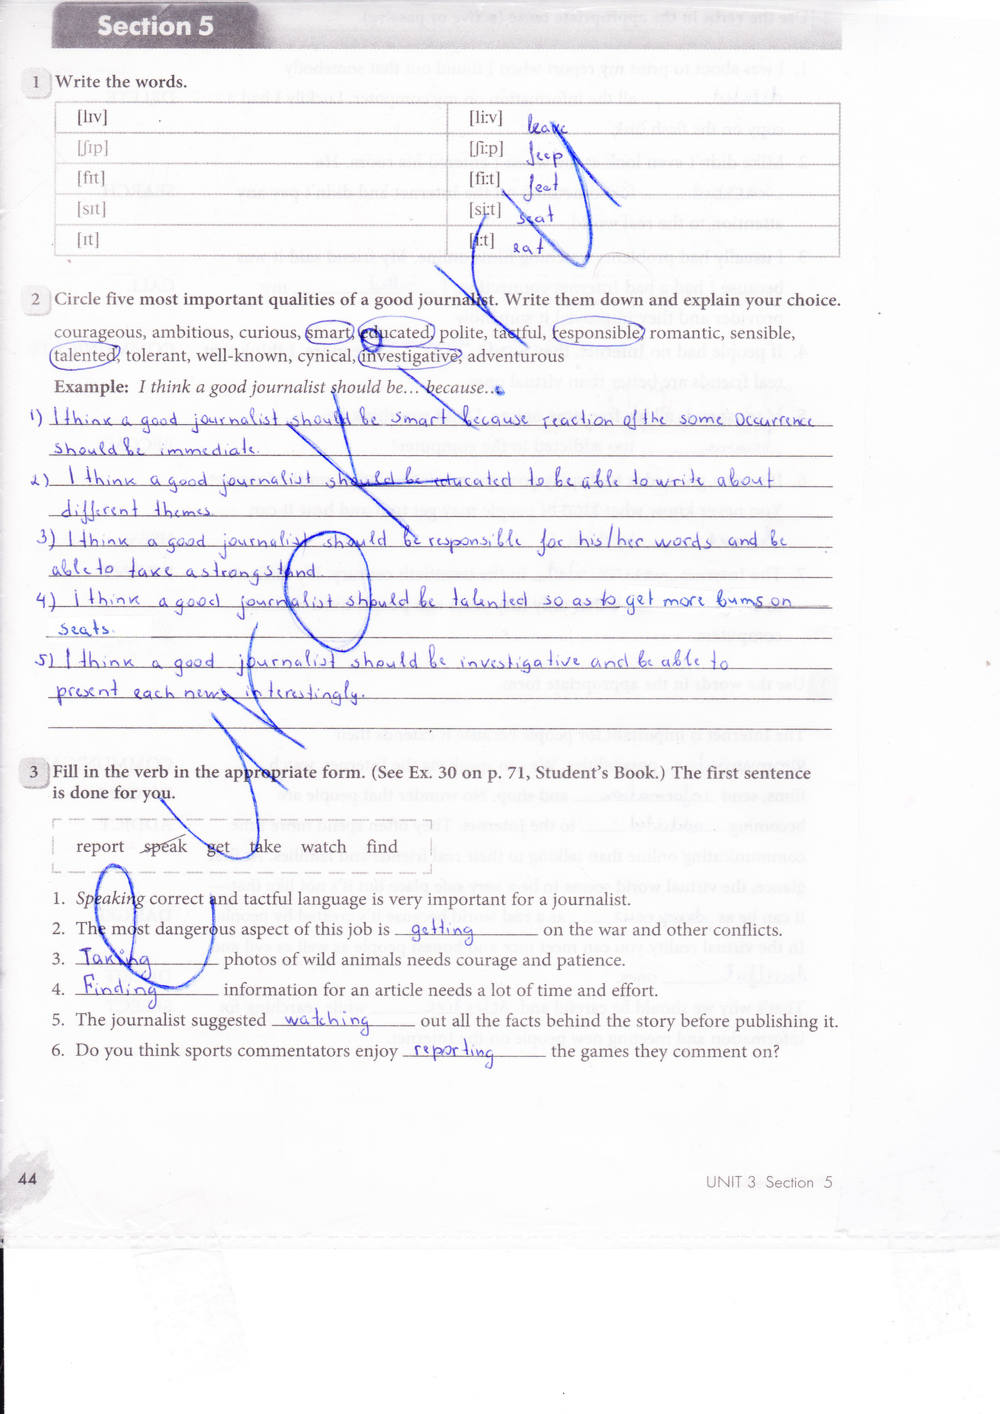 Рабочая тетрадь, 8 класс, Биболетова М.З. Бабушис Е.Е., 2016, задание: стр. 44